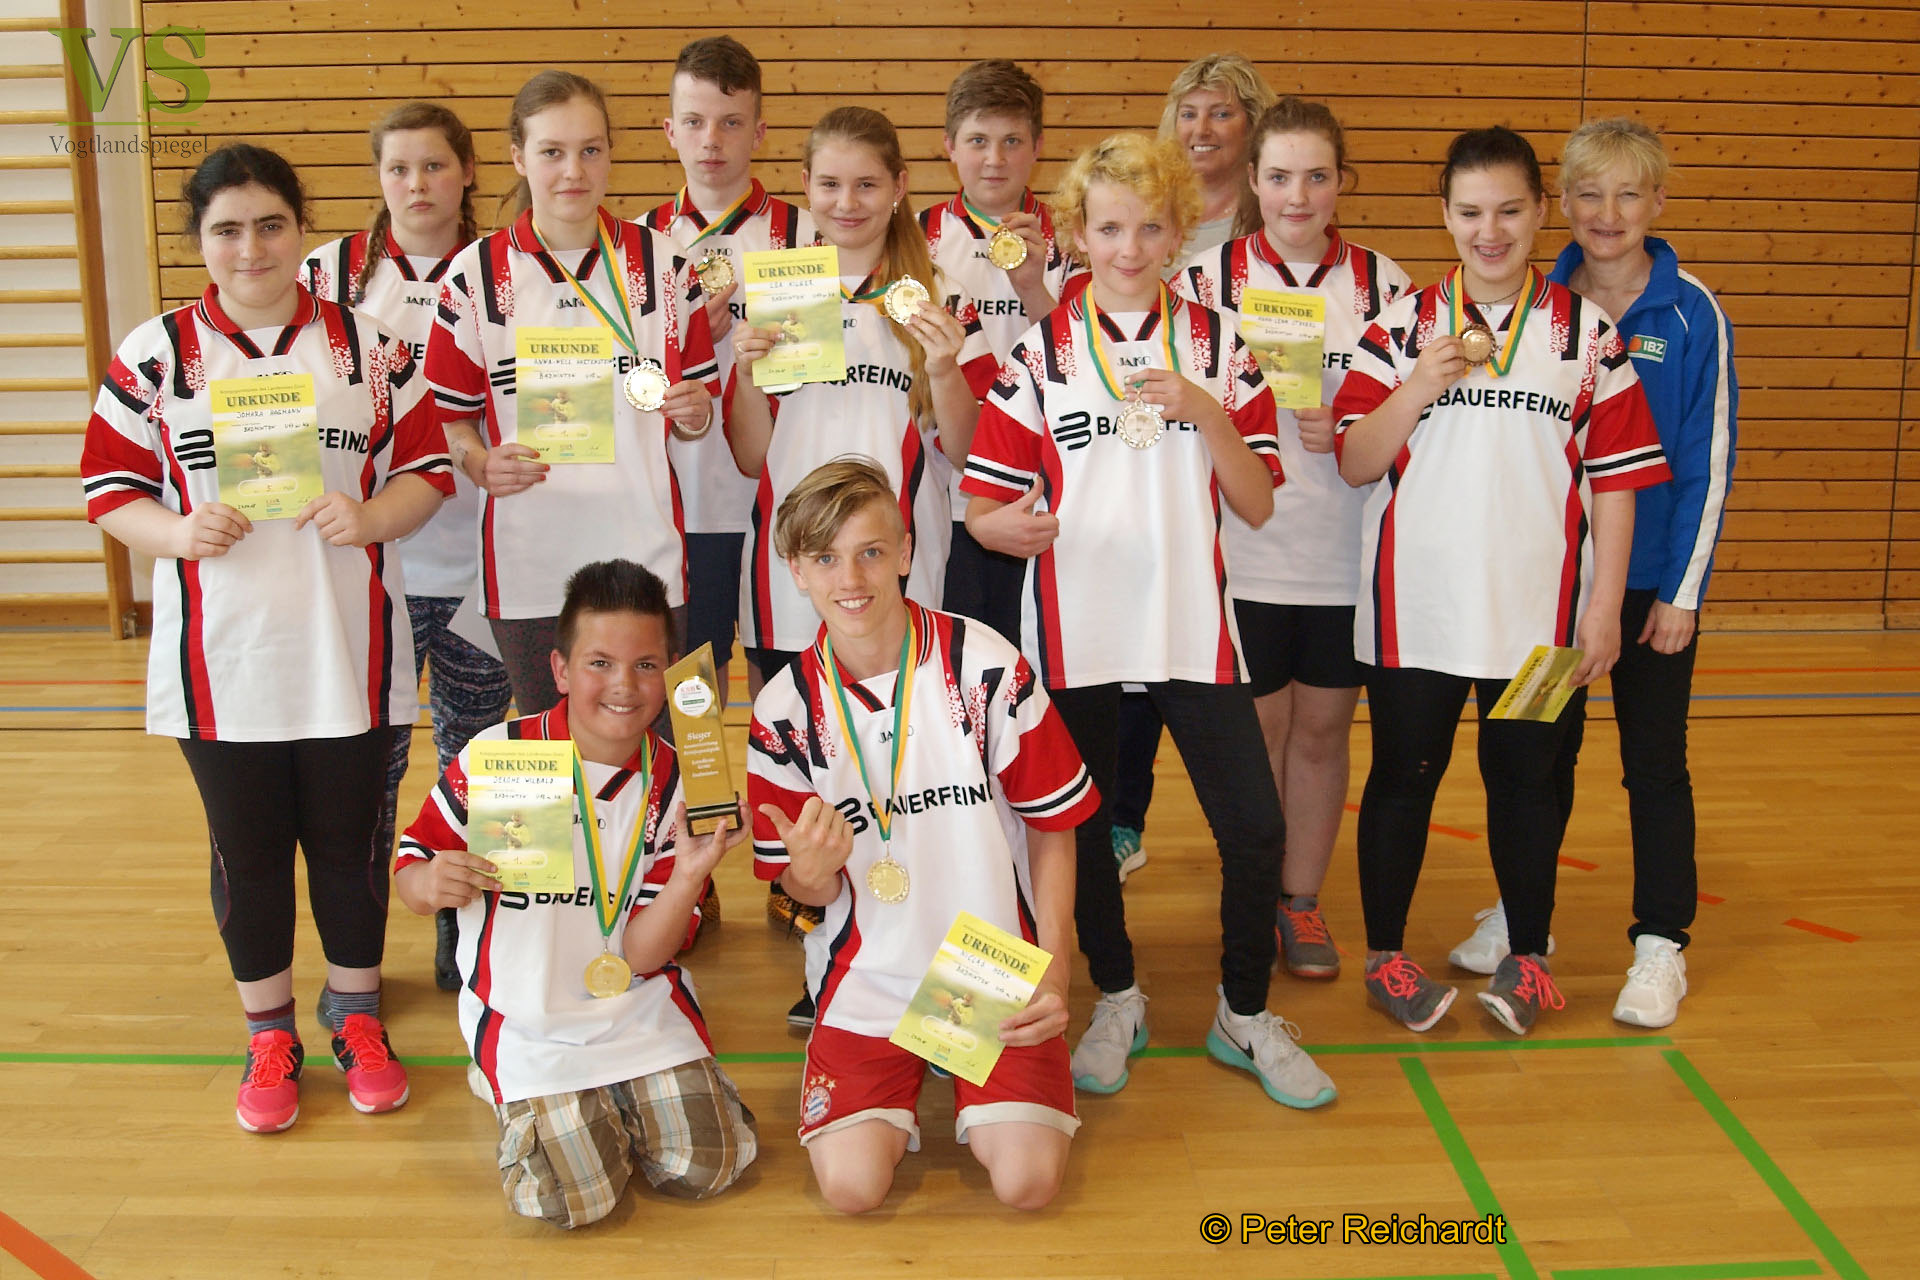 Kreisjugendspiele im Badminton: Schulmannschaft des Pestalozzi-Förderzentrums Zeulenroda holt sich den Wanderpokal